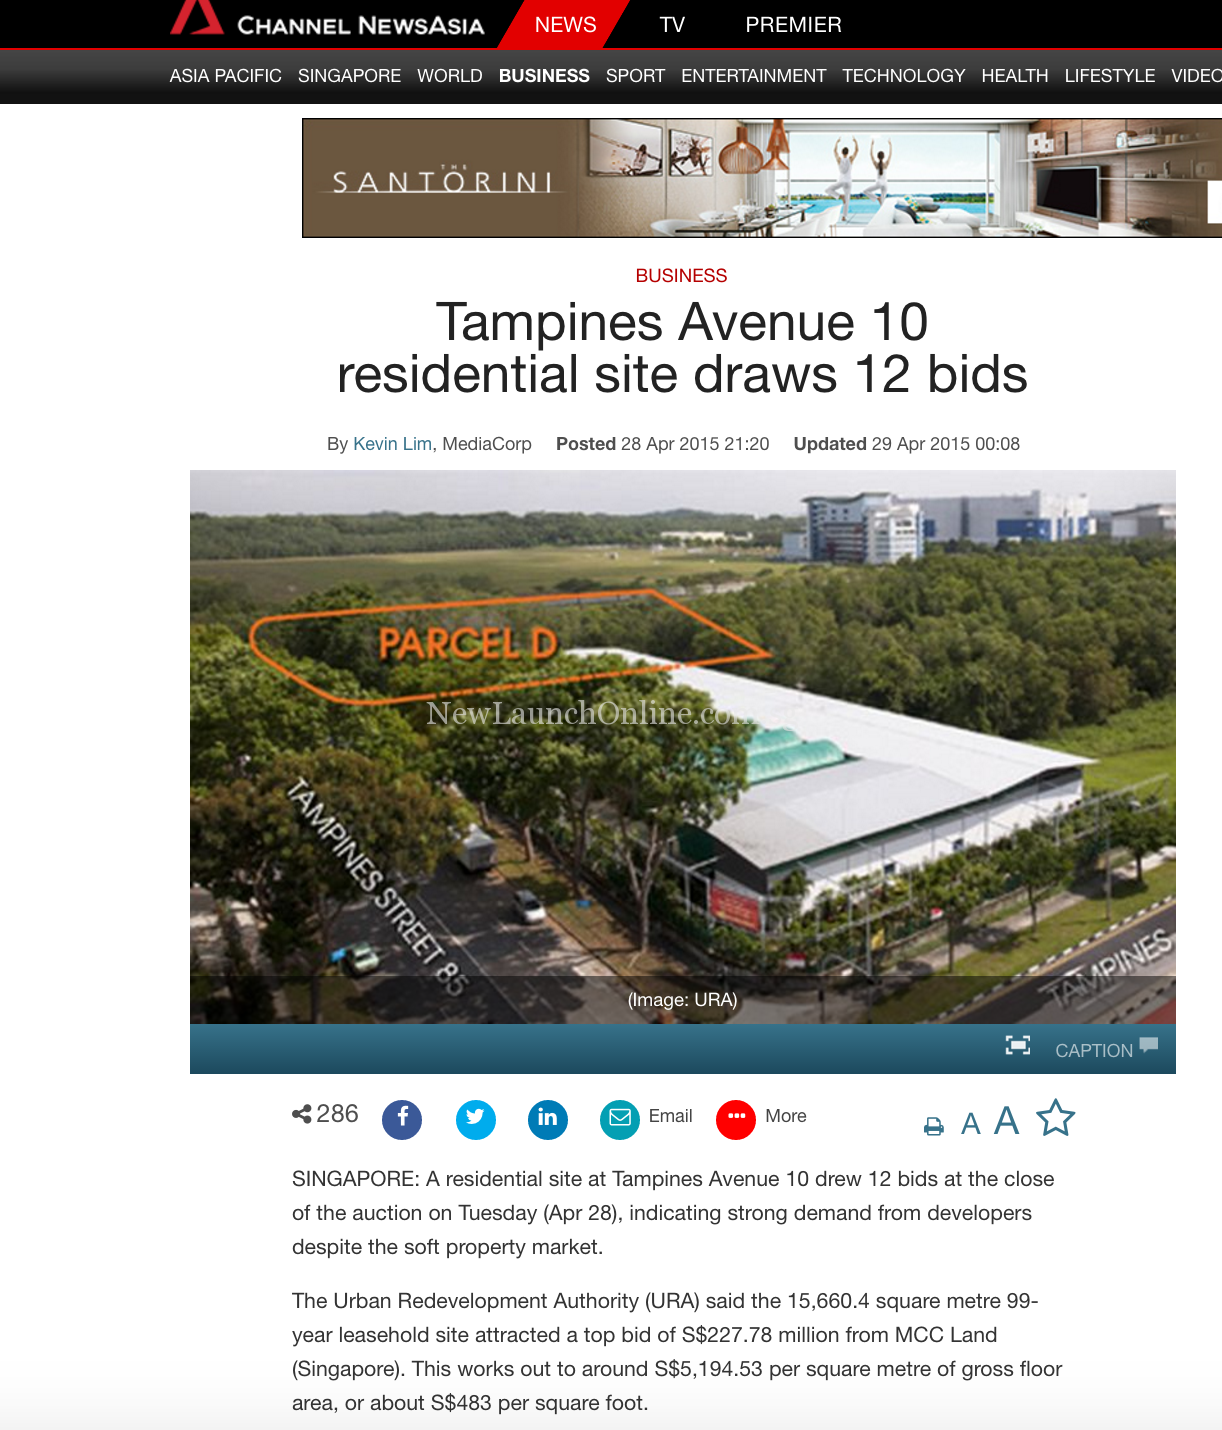 Tampines Avenue 10 residential site draws 12 bids